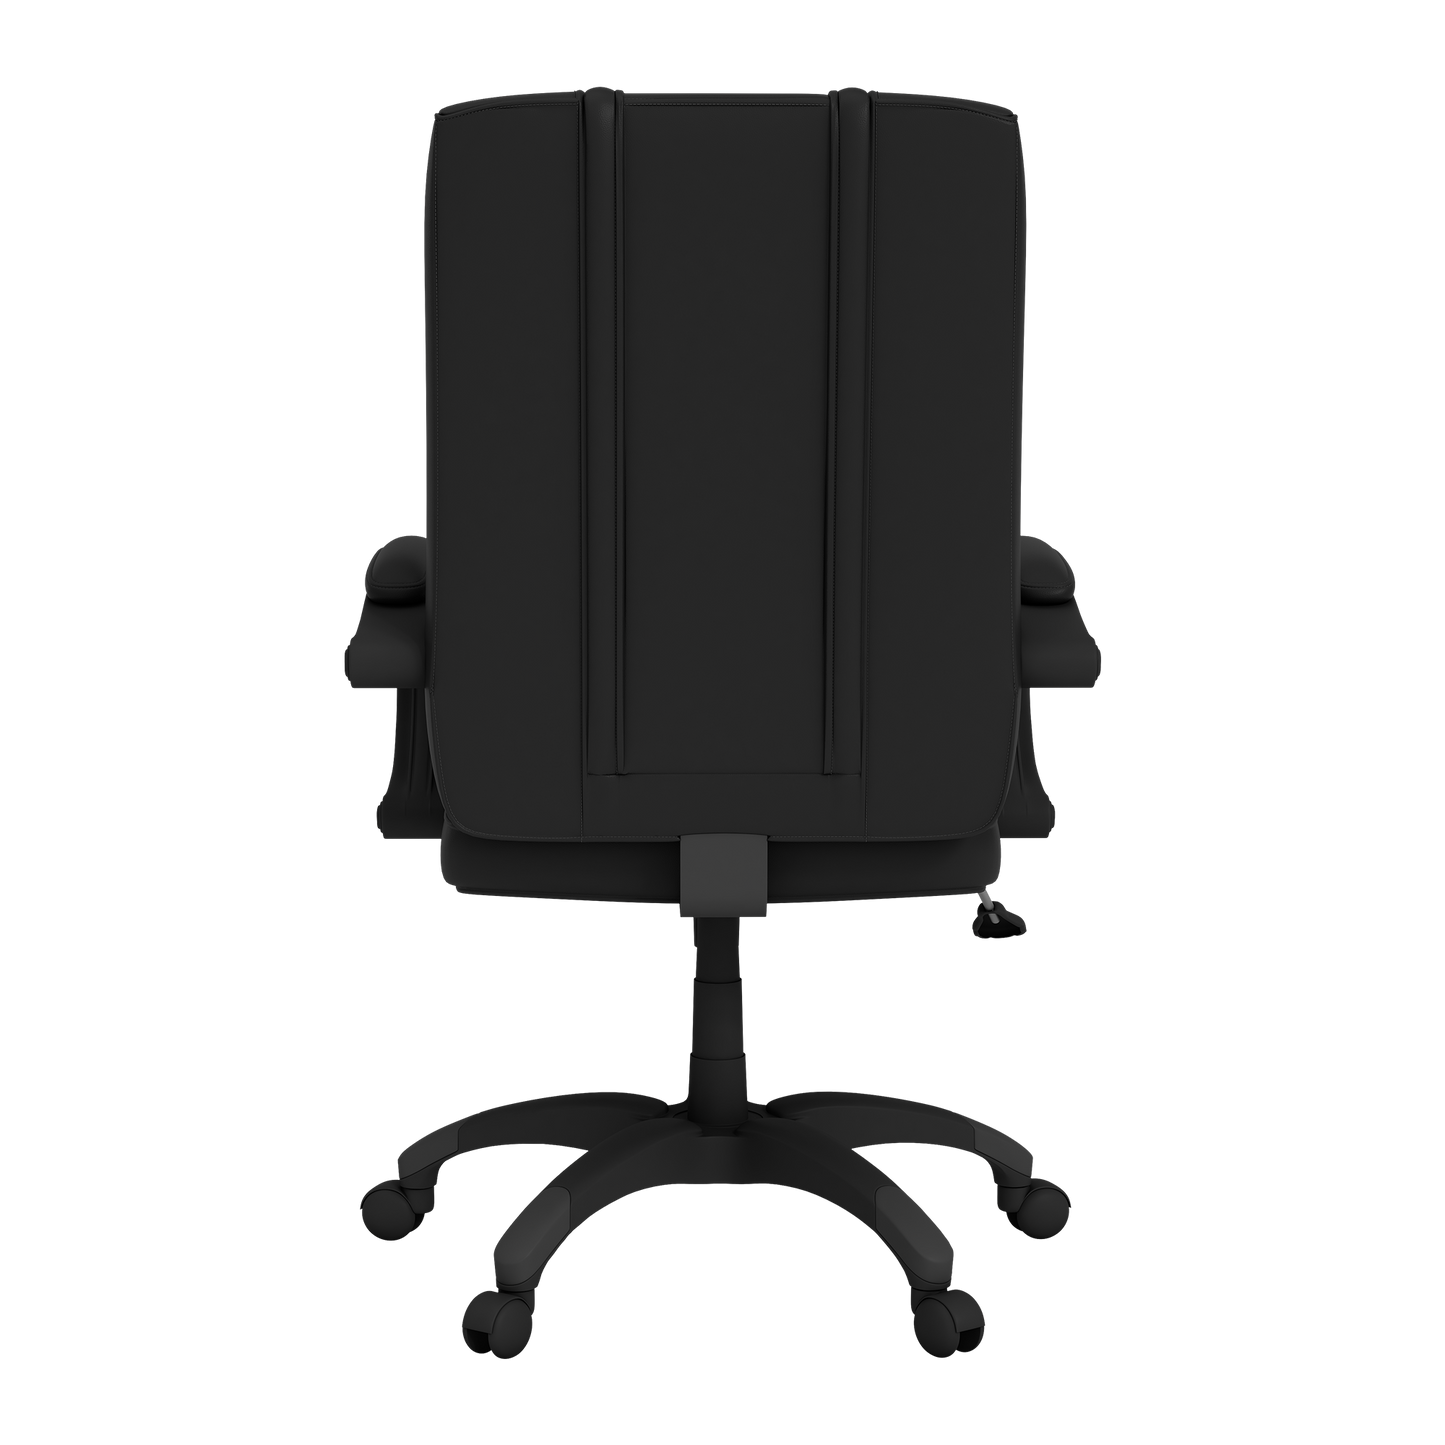 Office Chair 1000 with Baylor Bears Logo